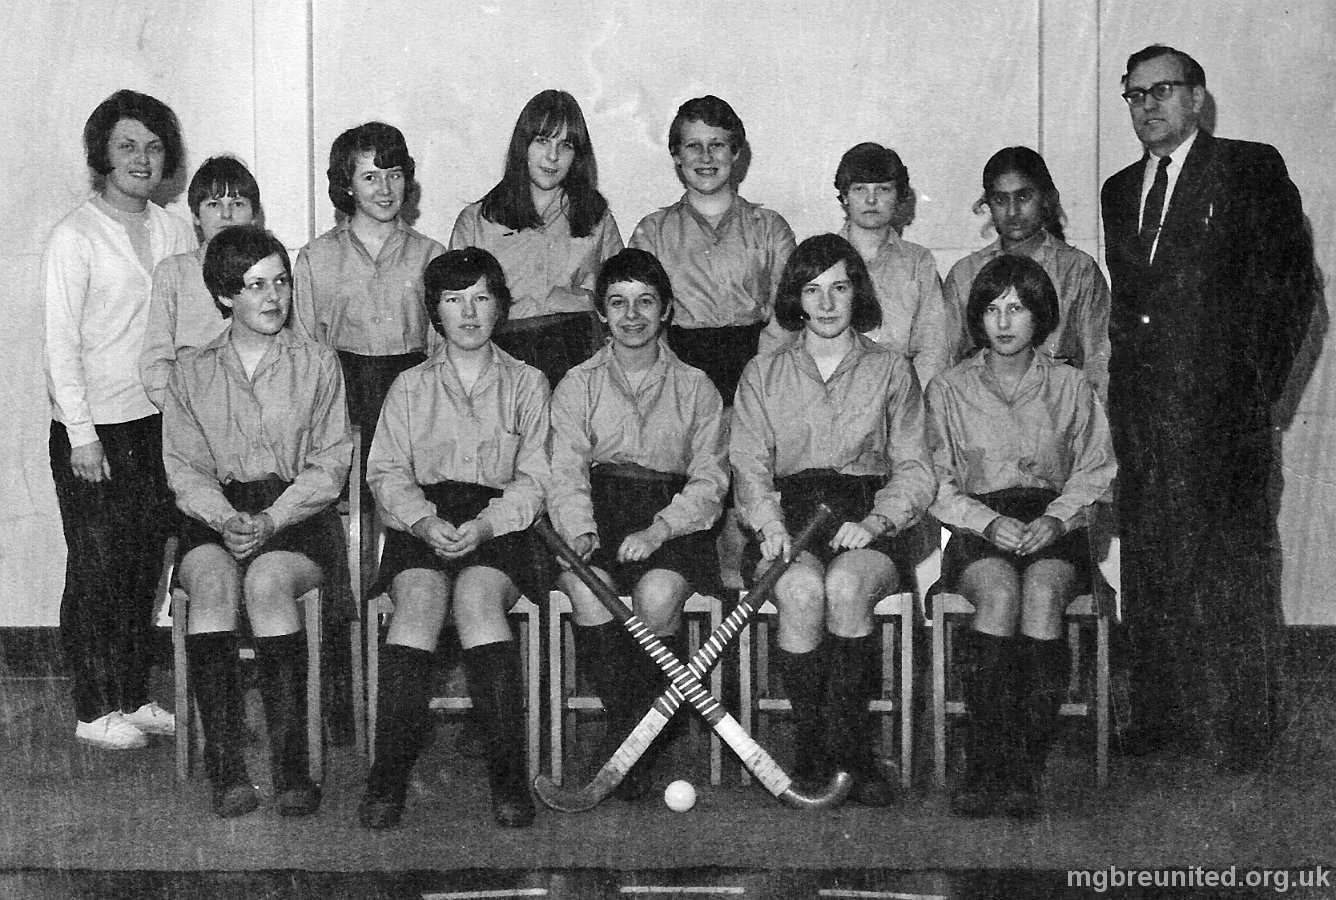 1968 ? The Hockey Team BACK ROW: 1 Miss Turley 3 Pamela McClure, 5 Jennifer Gibson? 7 Balbir Chelley, 8 Mr Peake FRONT ROW: